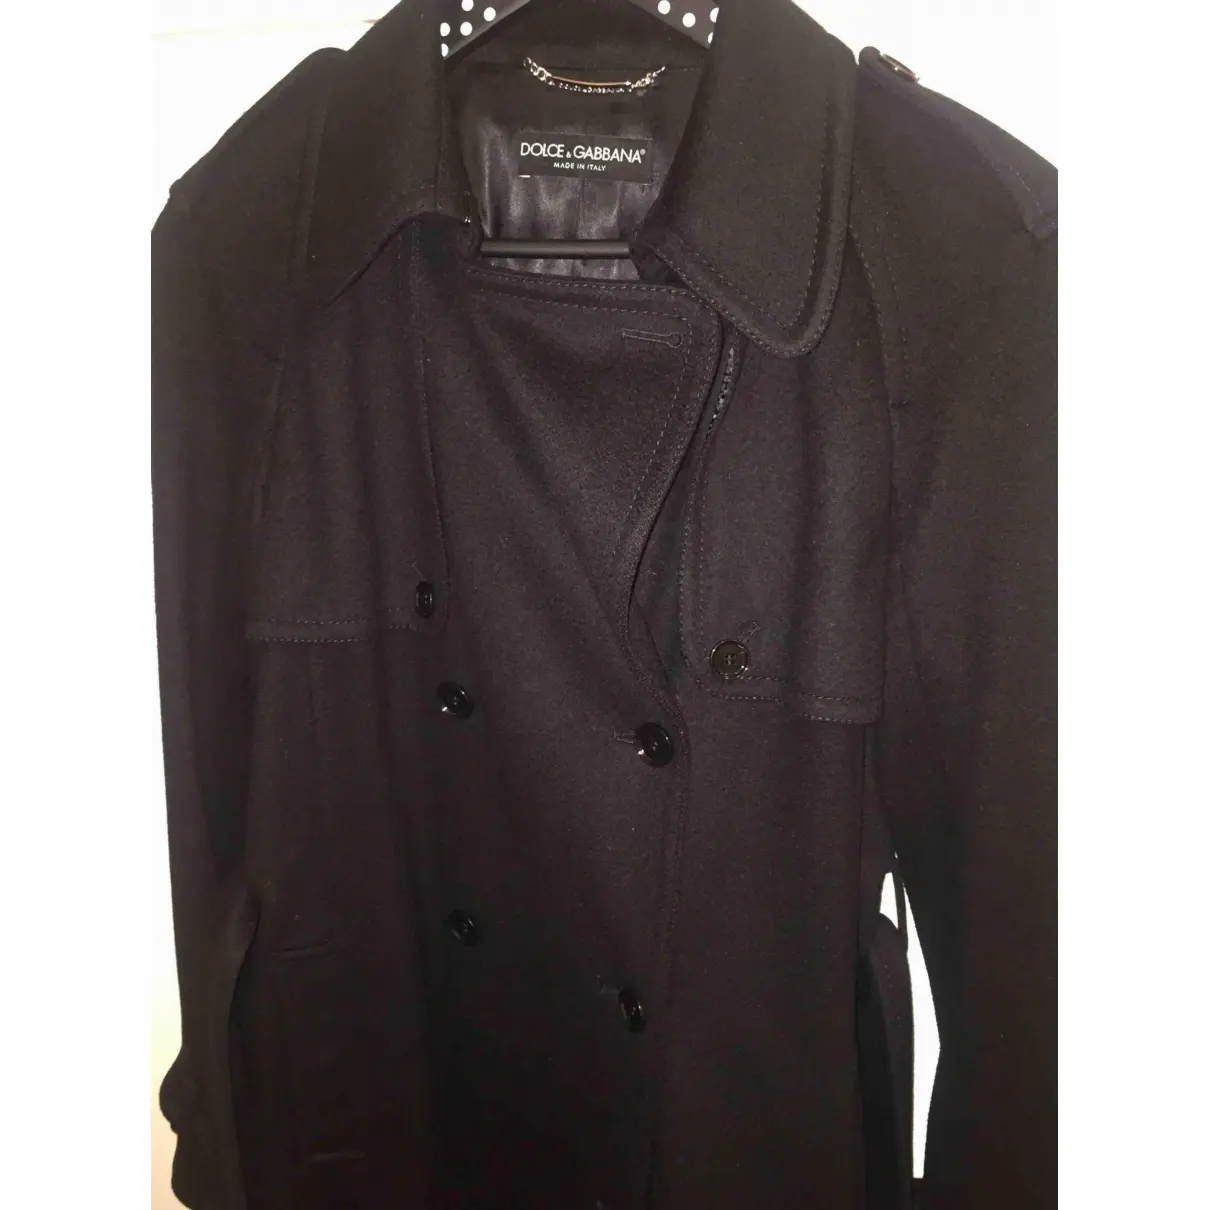 Buy Dolce & Gabbana Trench coat online